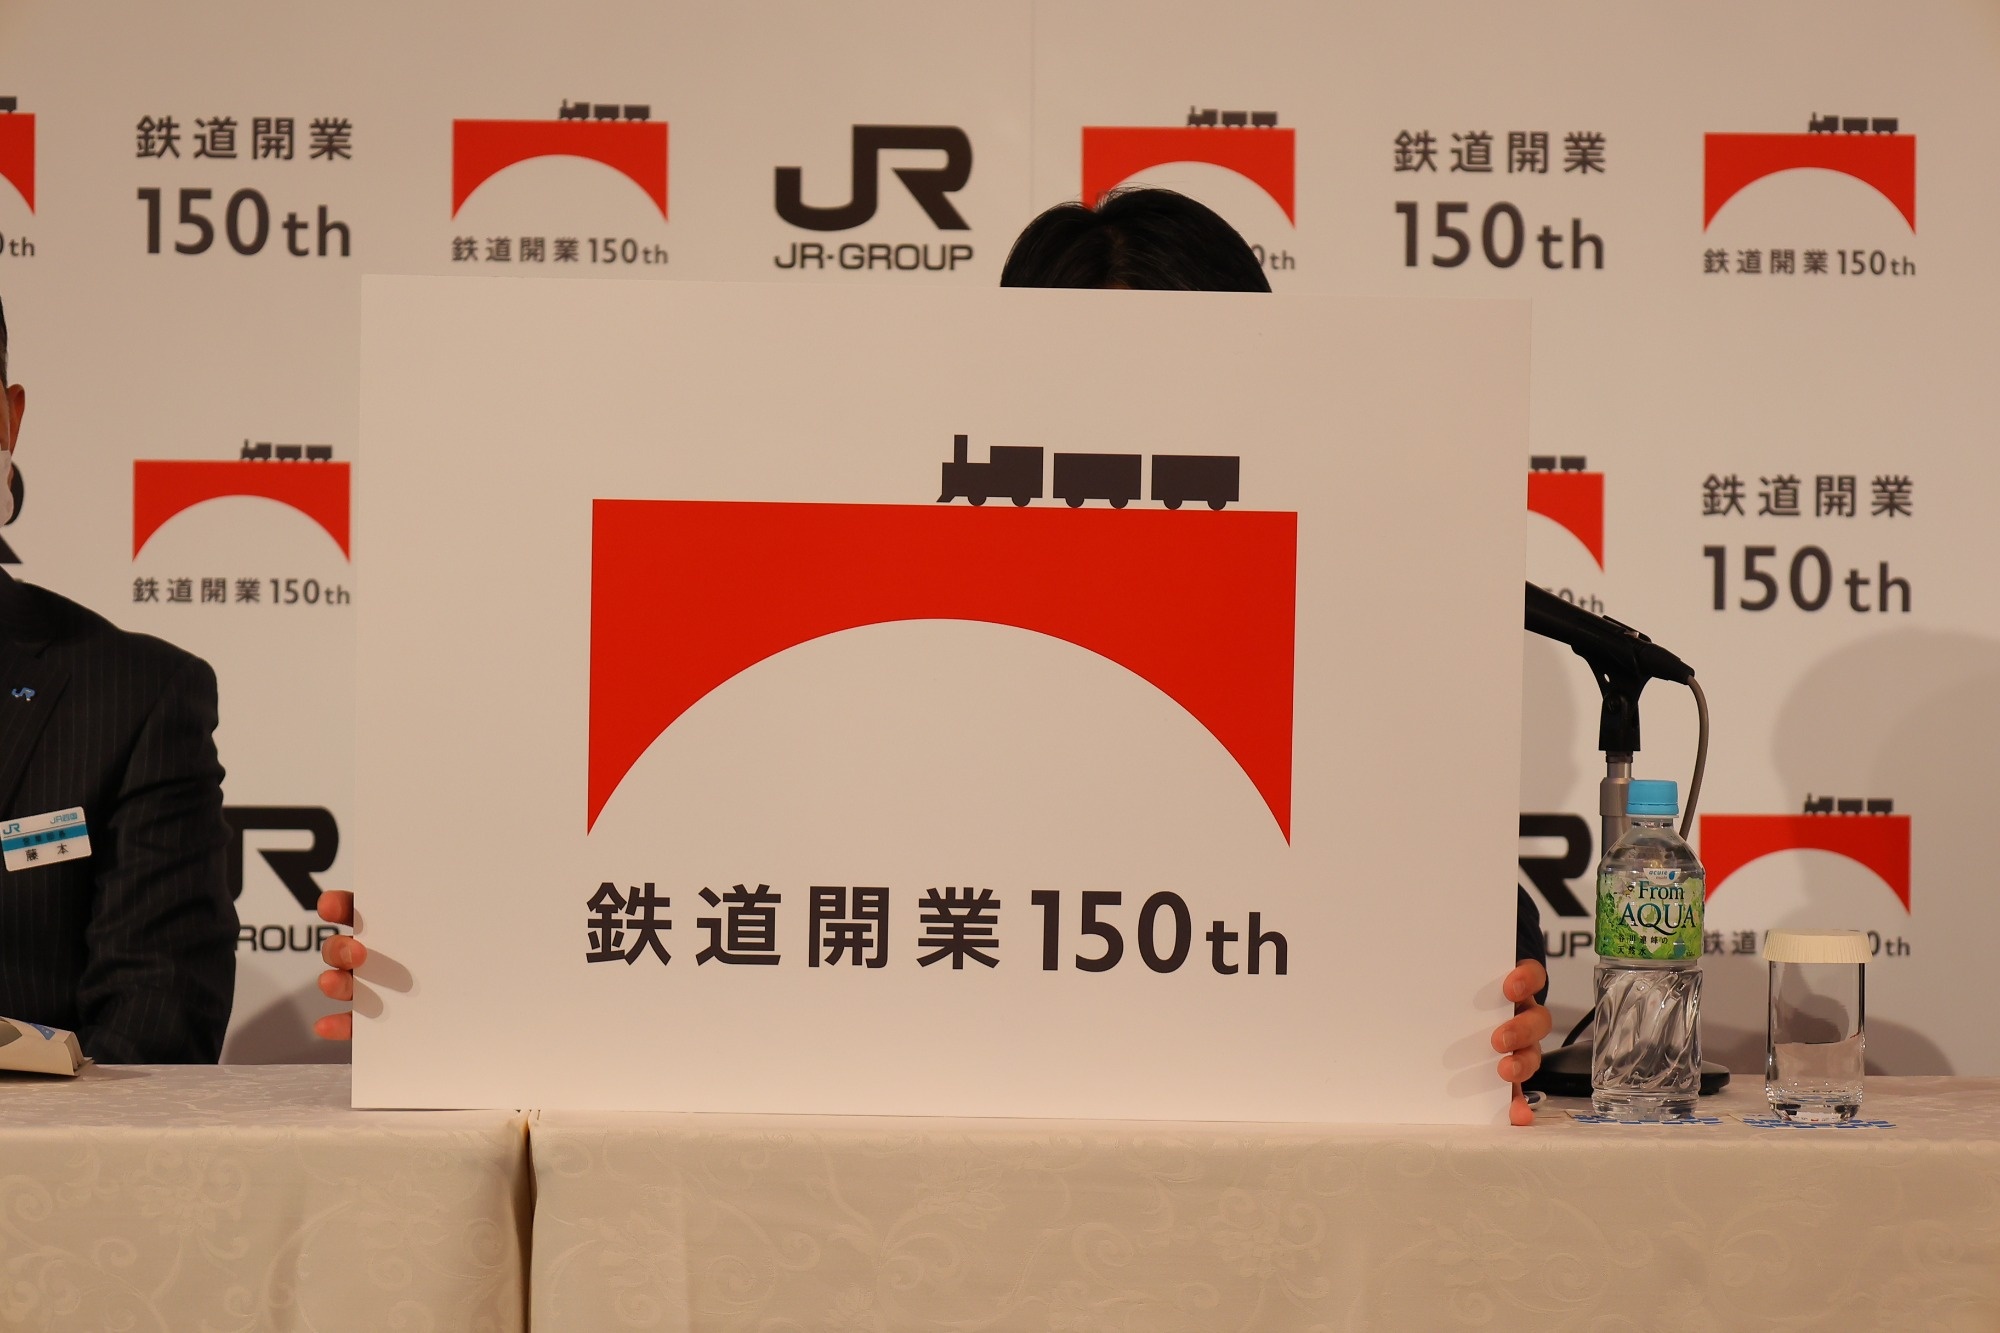 JRグループ、鉄道開業150年キャンペーン実施へ JR全駅入場券は70万円 | 鉄道ニュース | 鉄道新聞